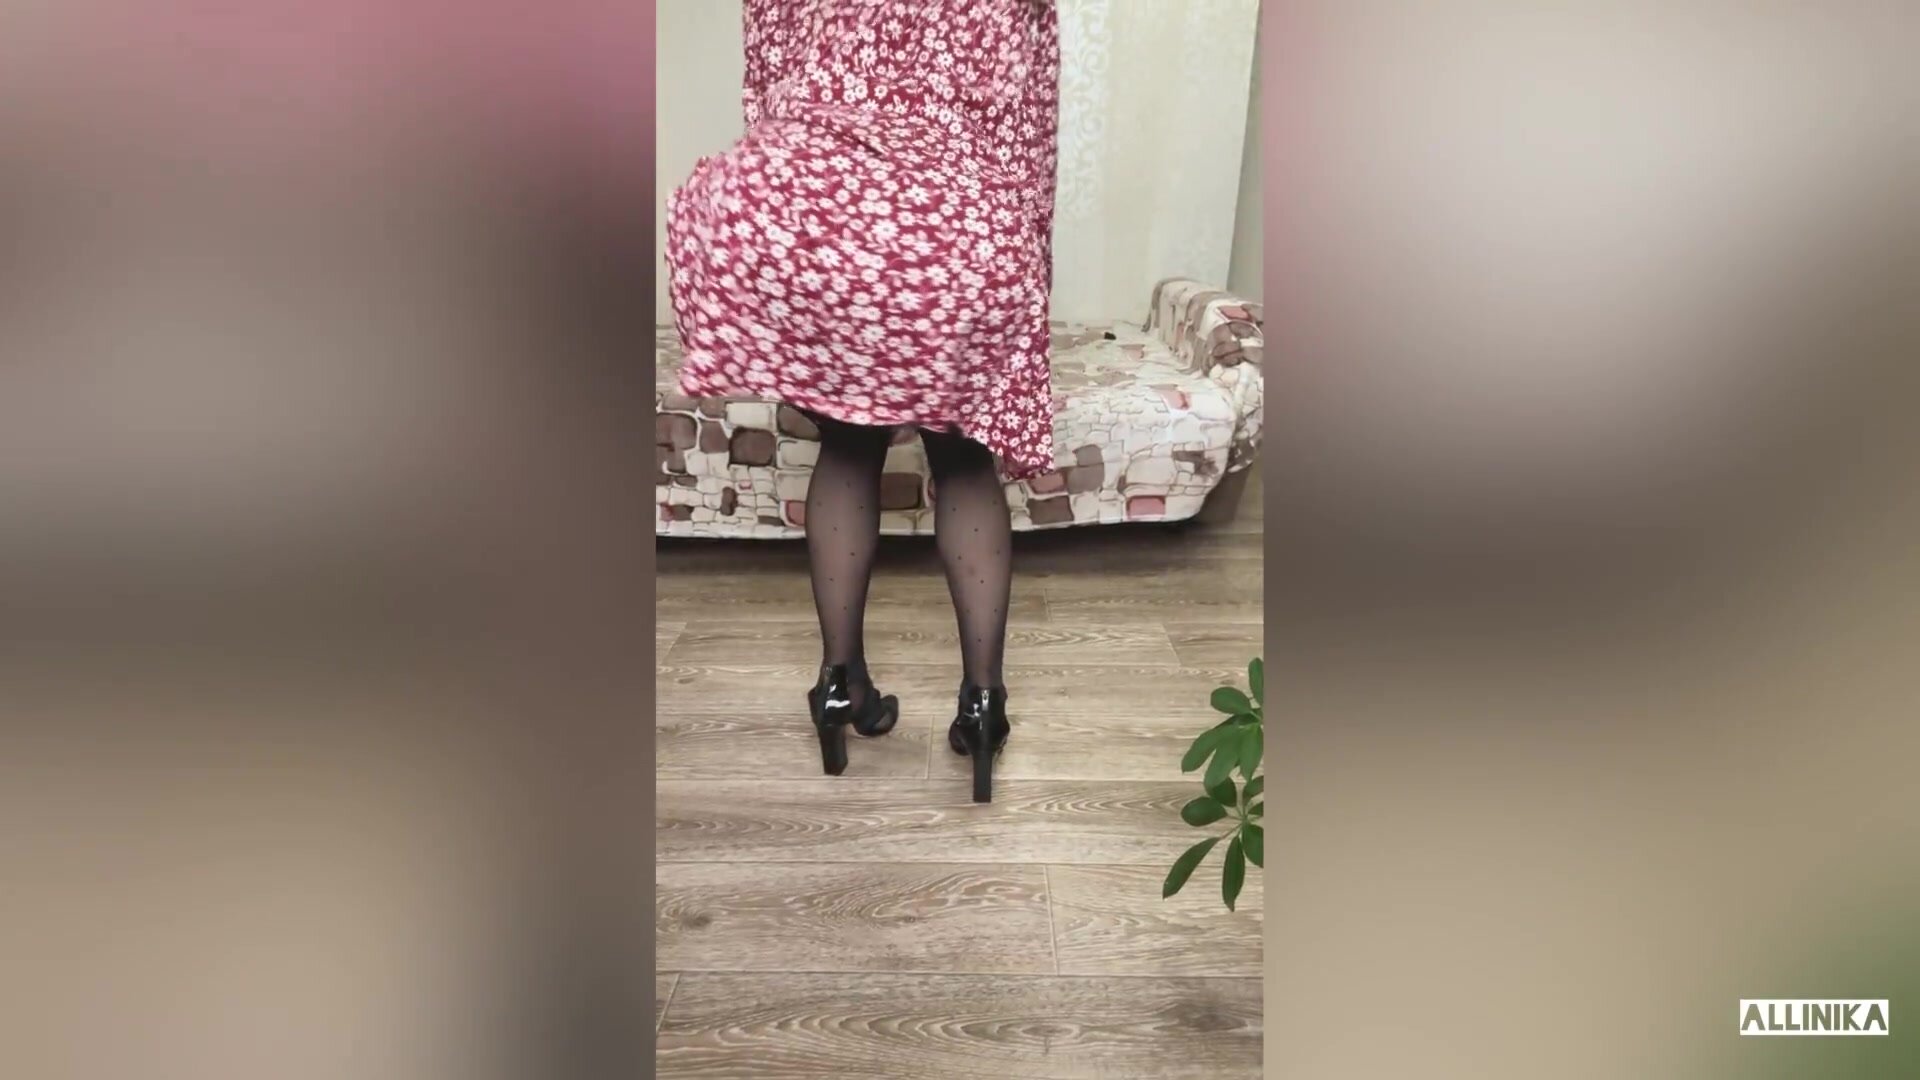 Allinika - Fucked Instagram Model in New Dress!  Embed Player